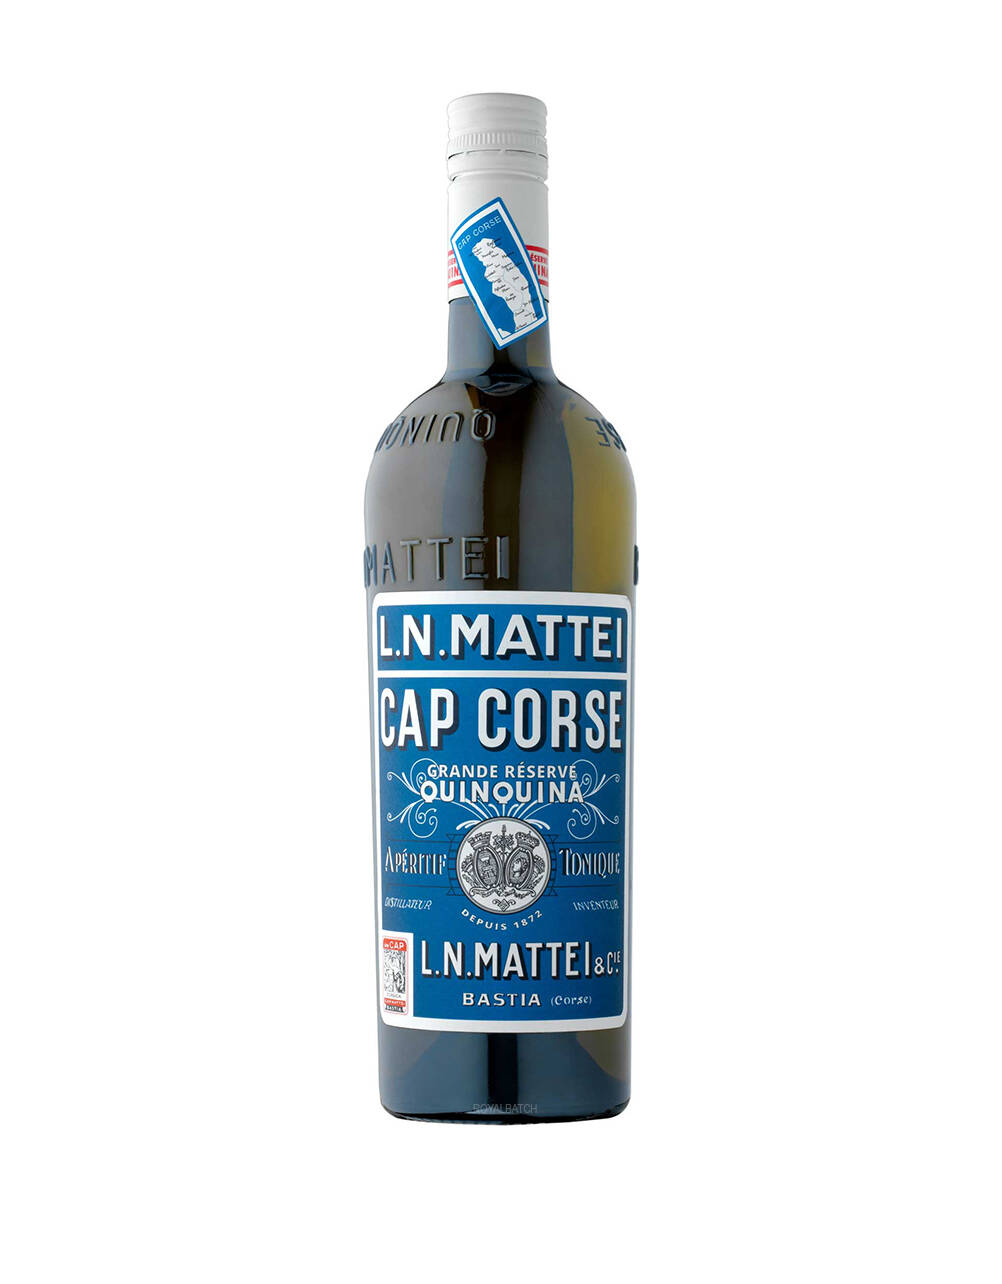 L.N. Mattei Cap Corse Blanc Quinquina Aperitif Wine